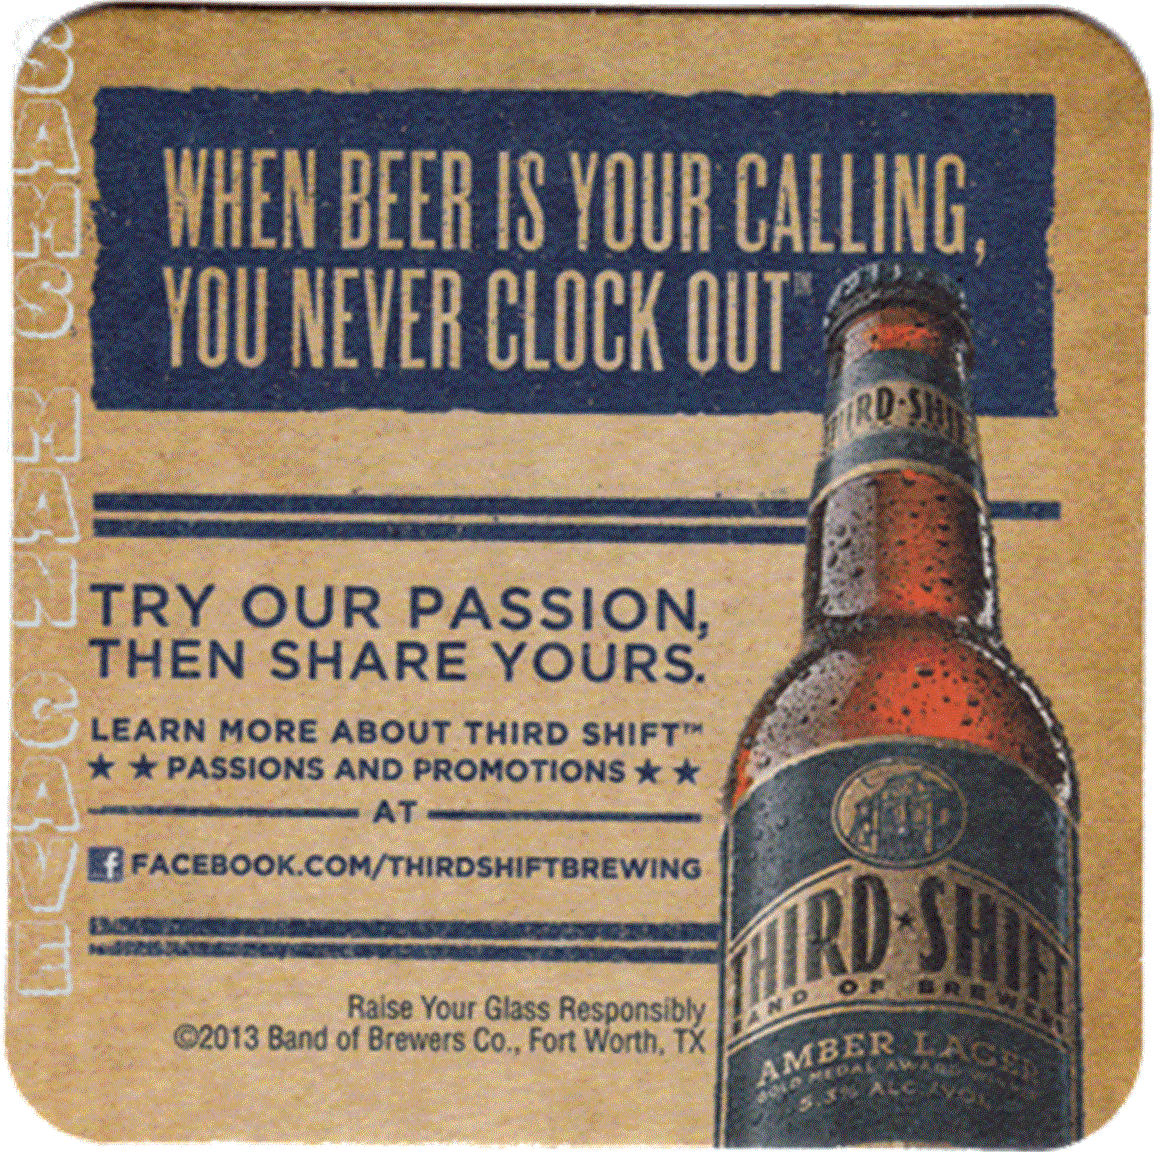 Third Shift Clock Out Beer Coaster